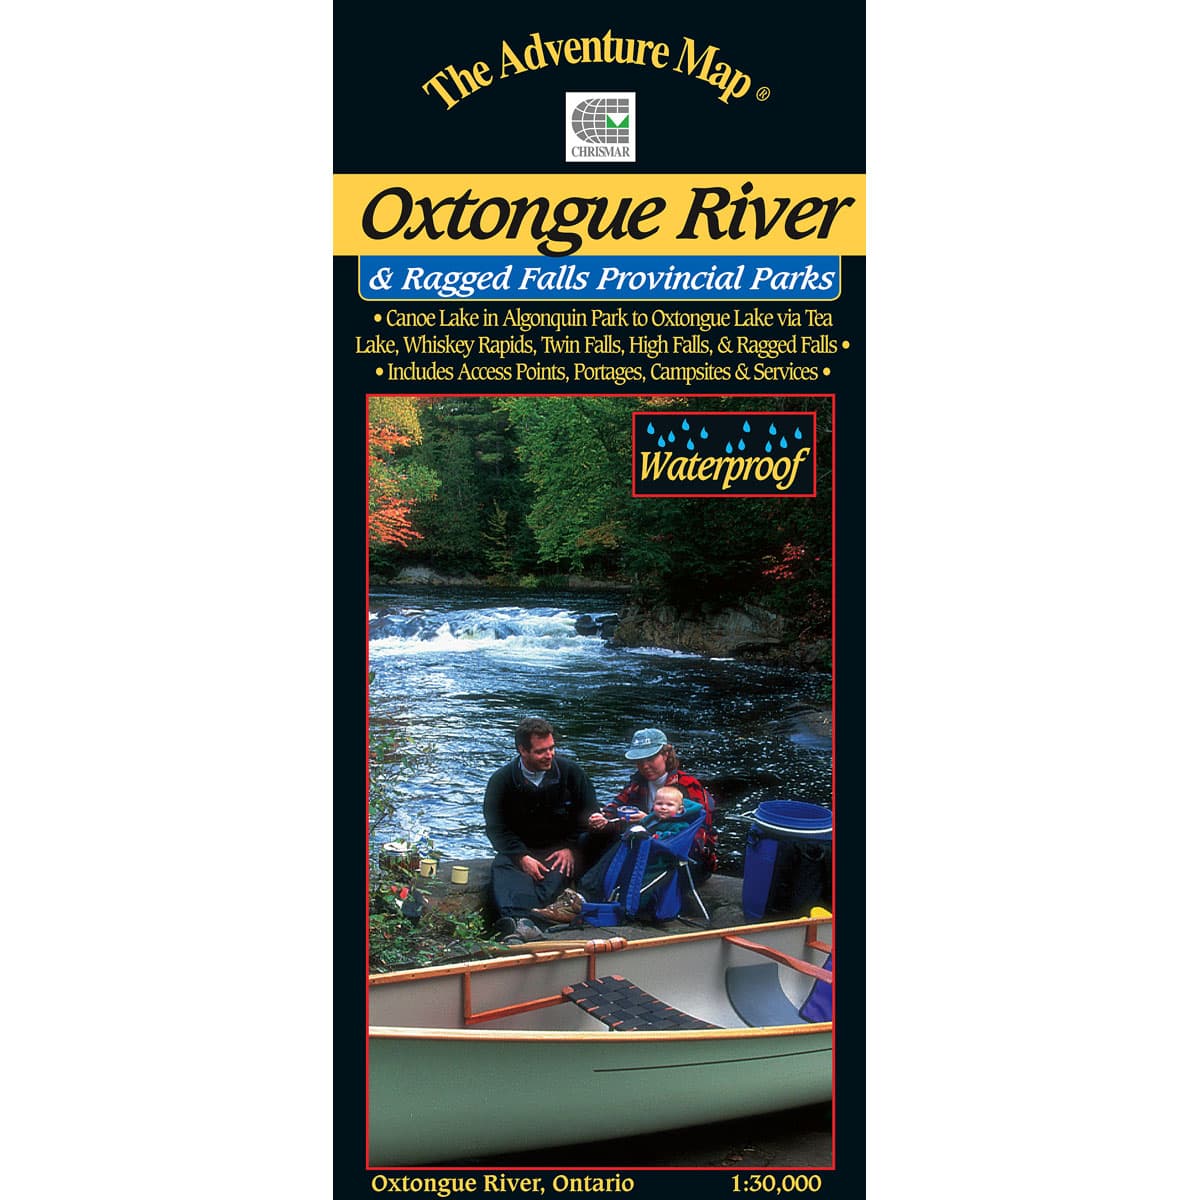 The Adventure Map Oxtongue River Provincial Park